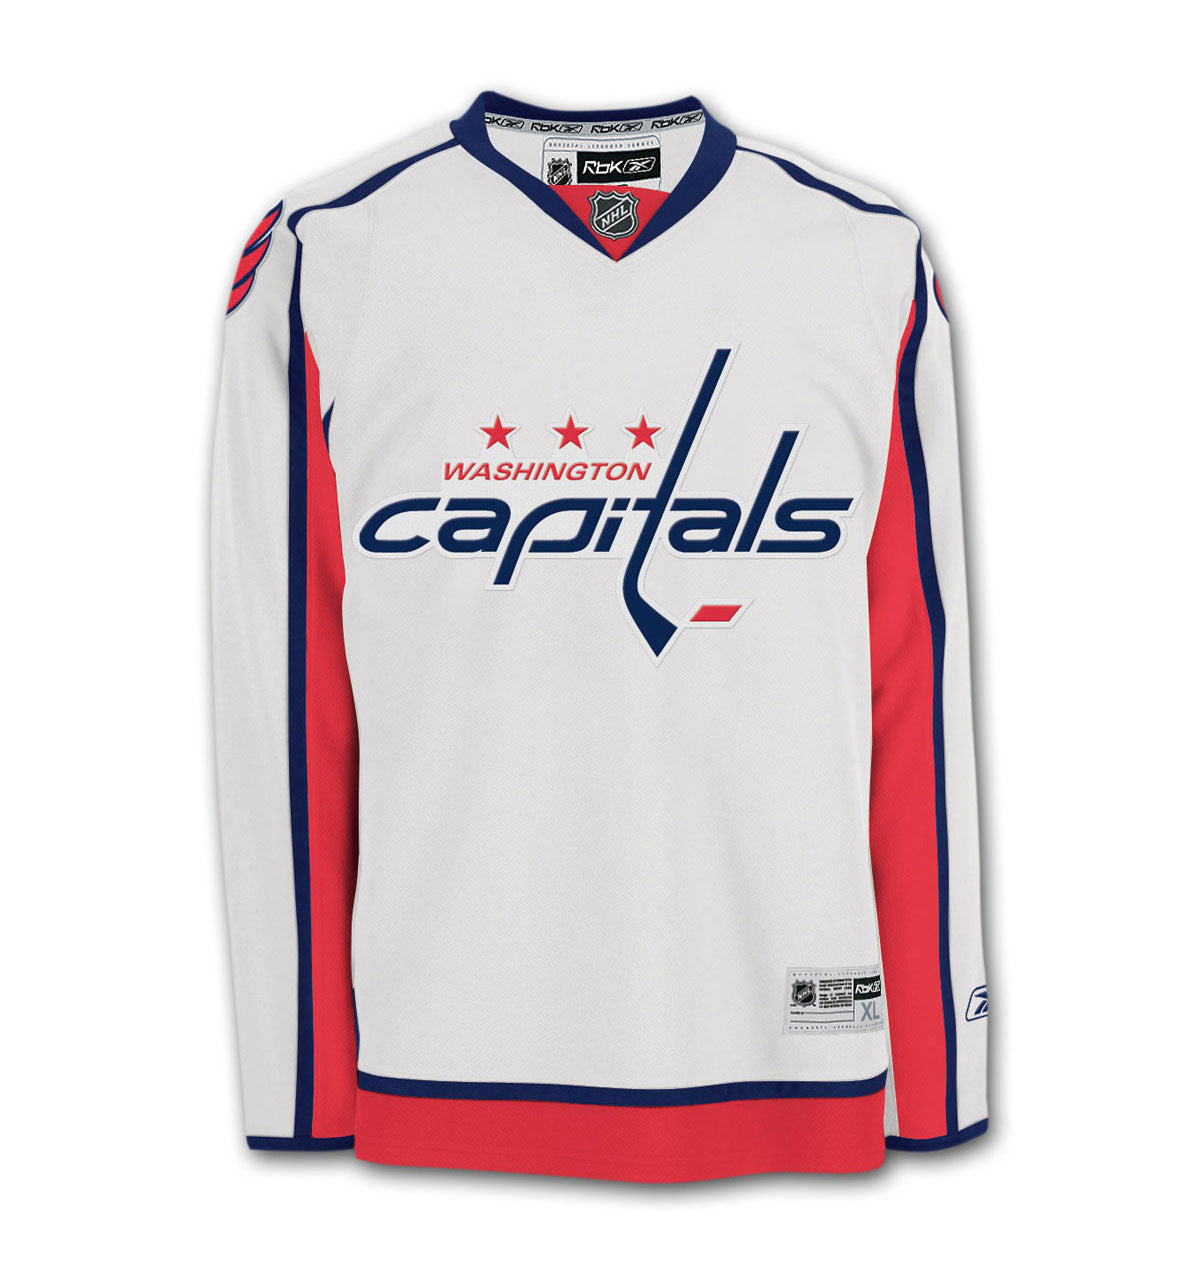 Washington Capitals captain merchandise